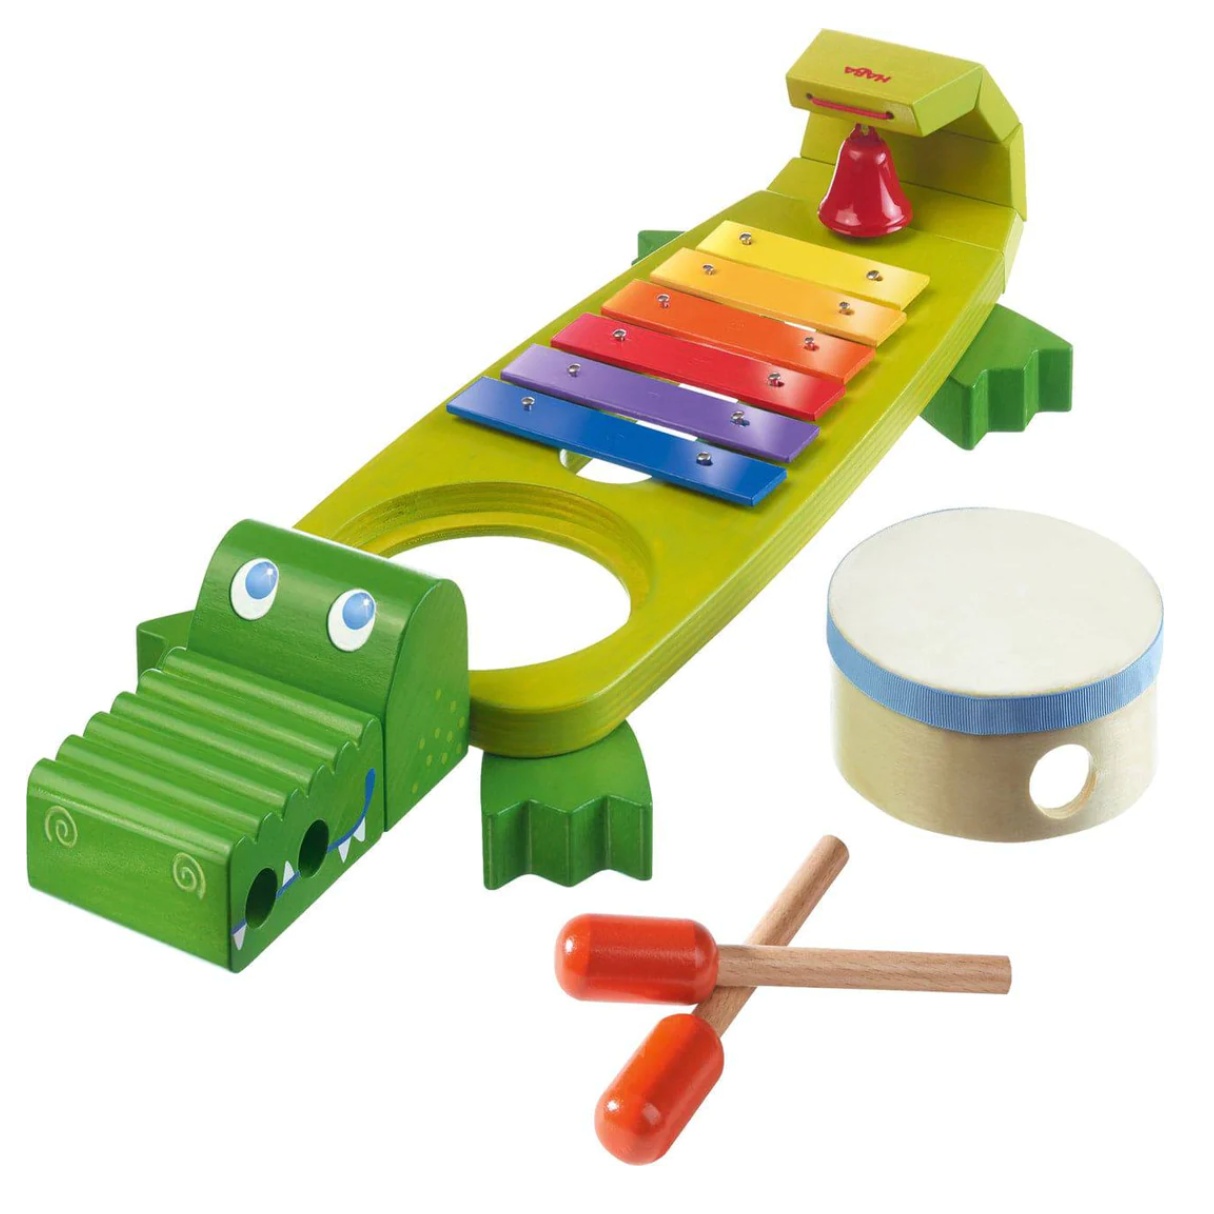 HABA Symphony Croc Musical Toy